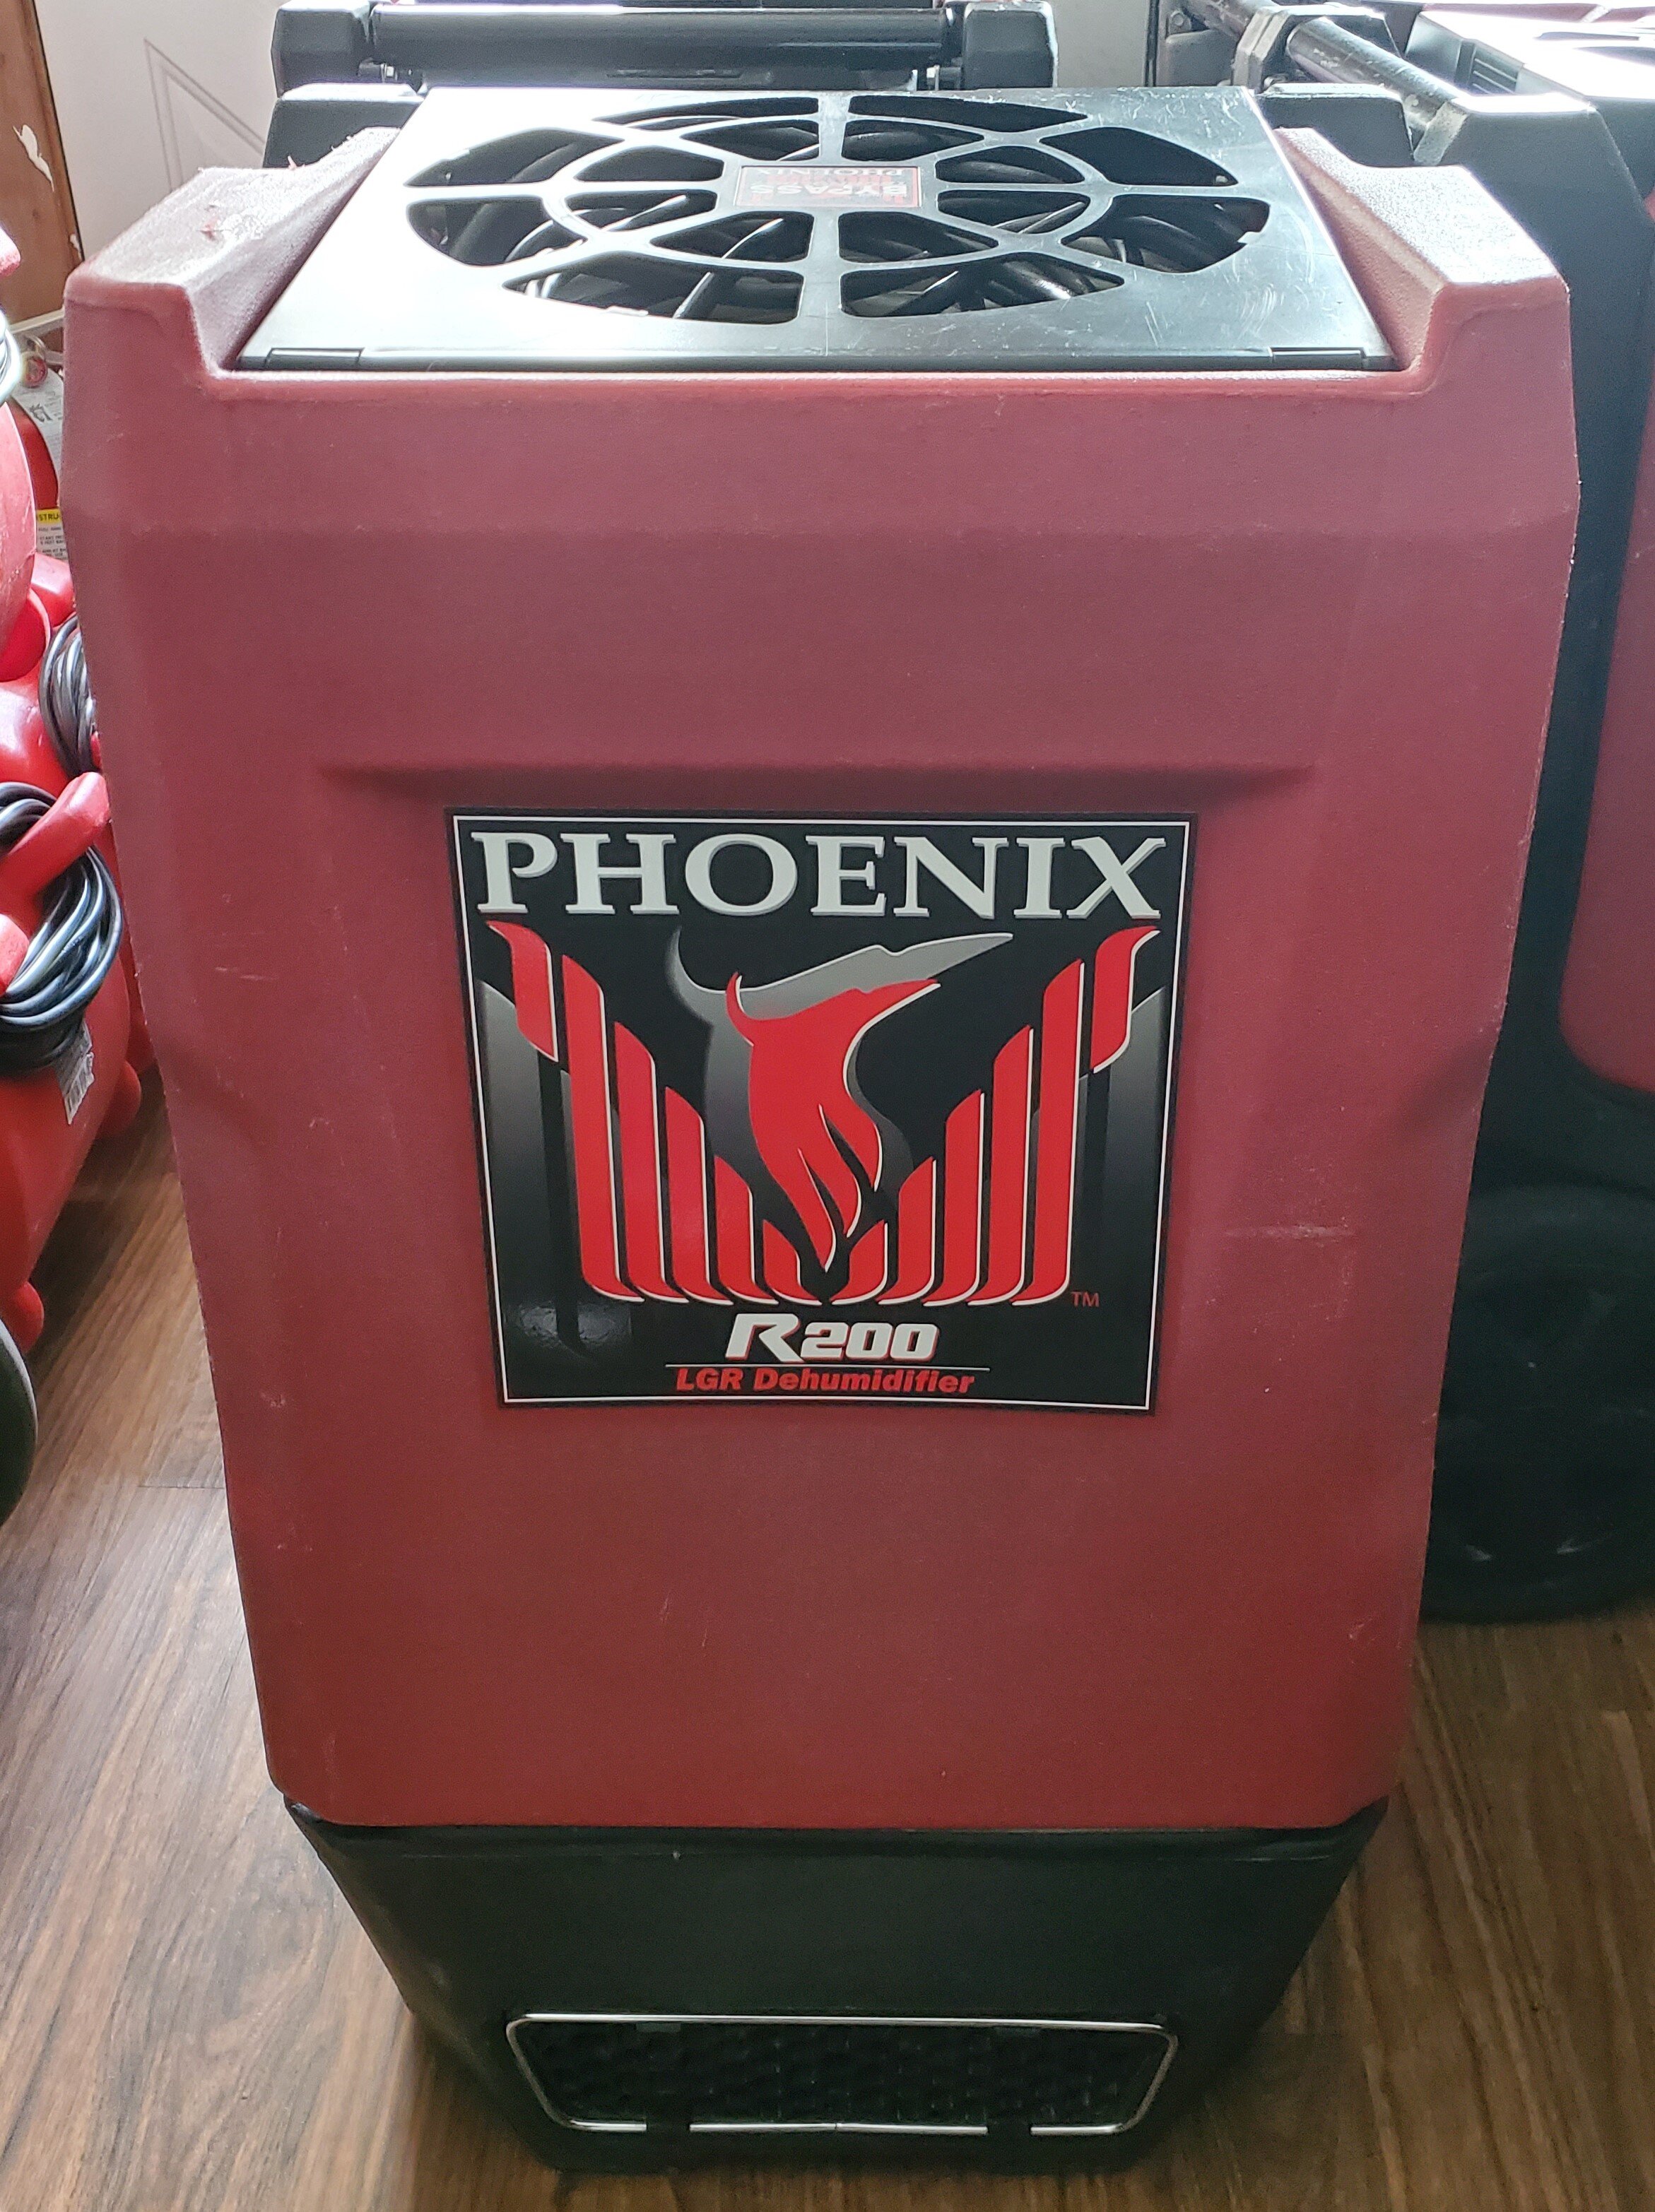 Phoenix R200 LGR XL Dehumidifier